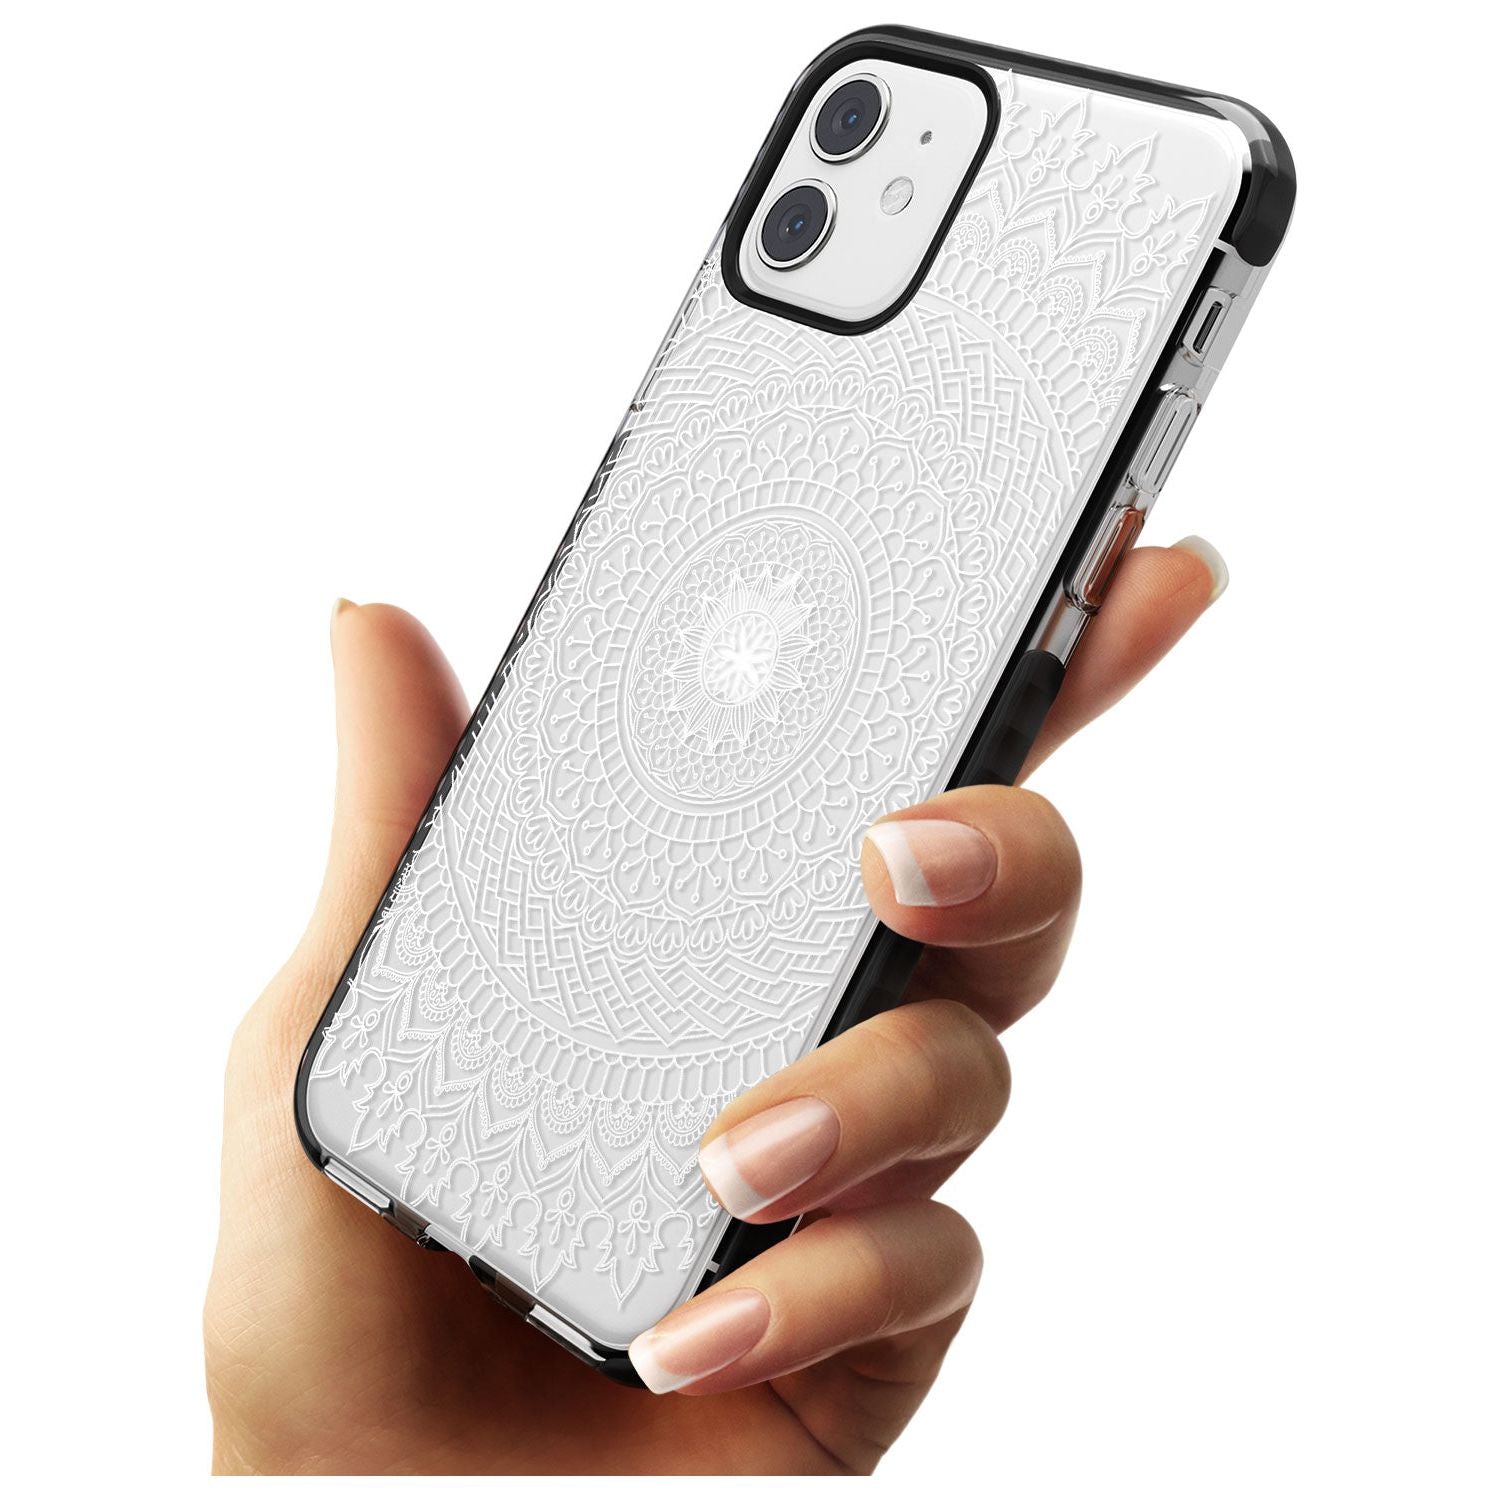 Large White Mandala Transparent Design Pink Fade Impact Phone Case for iPhone 11 Pro Max